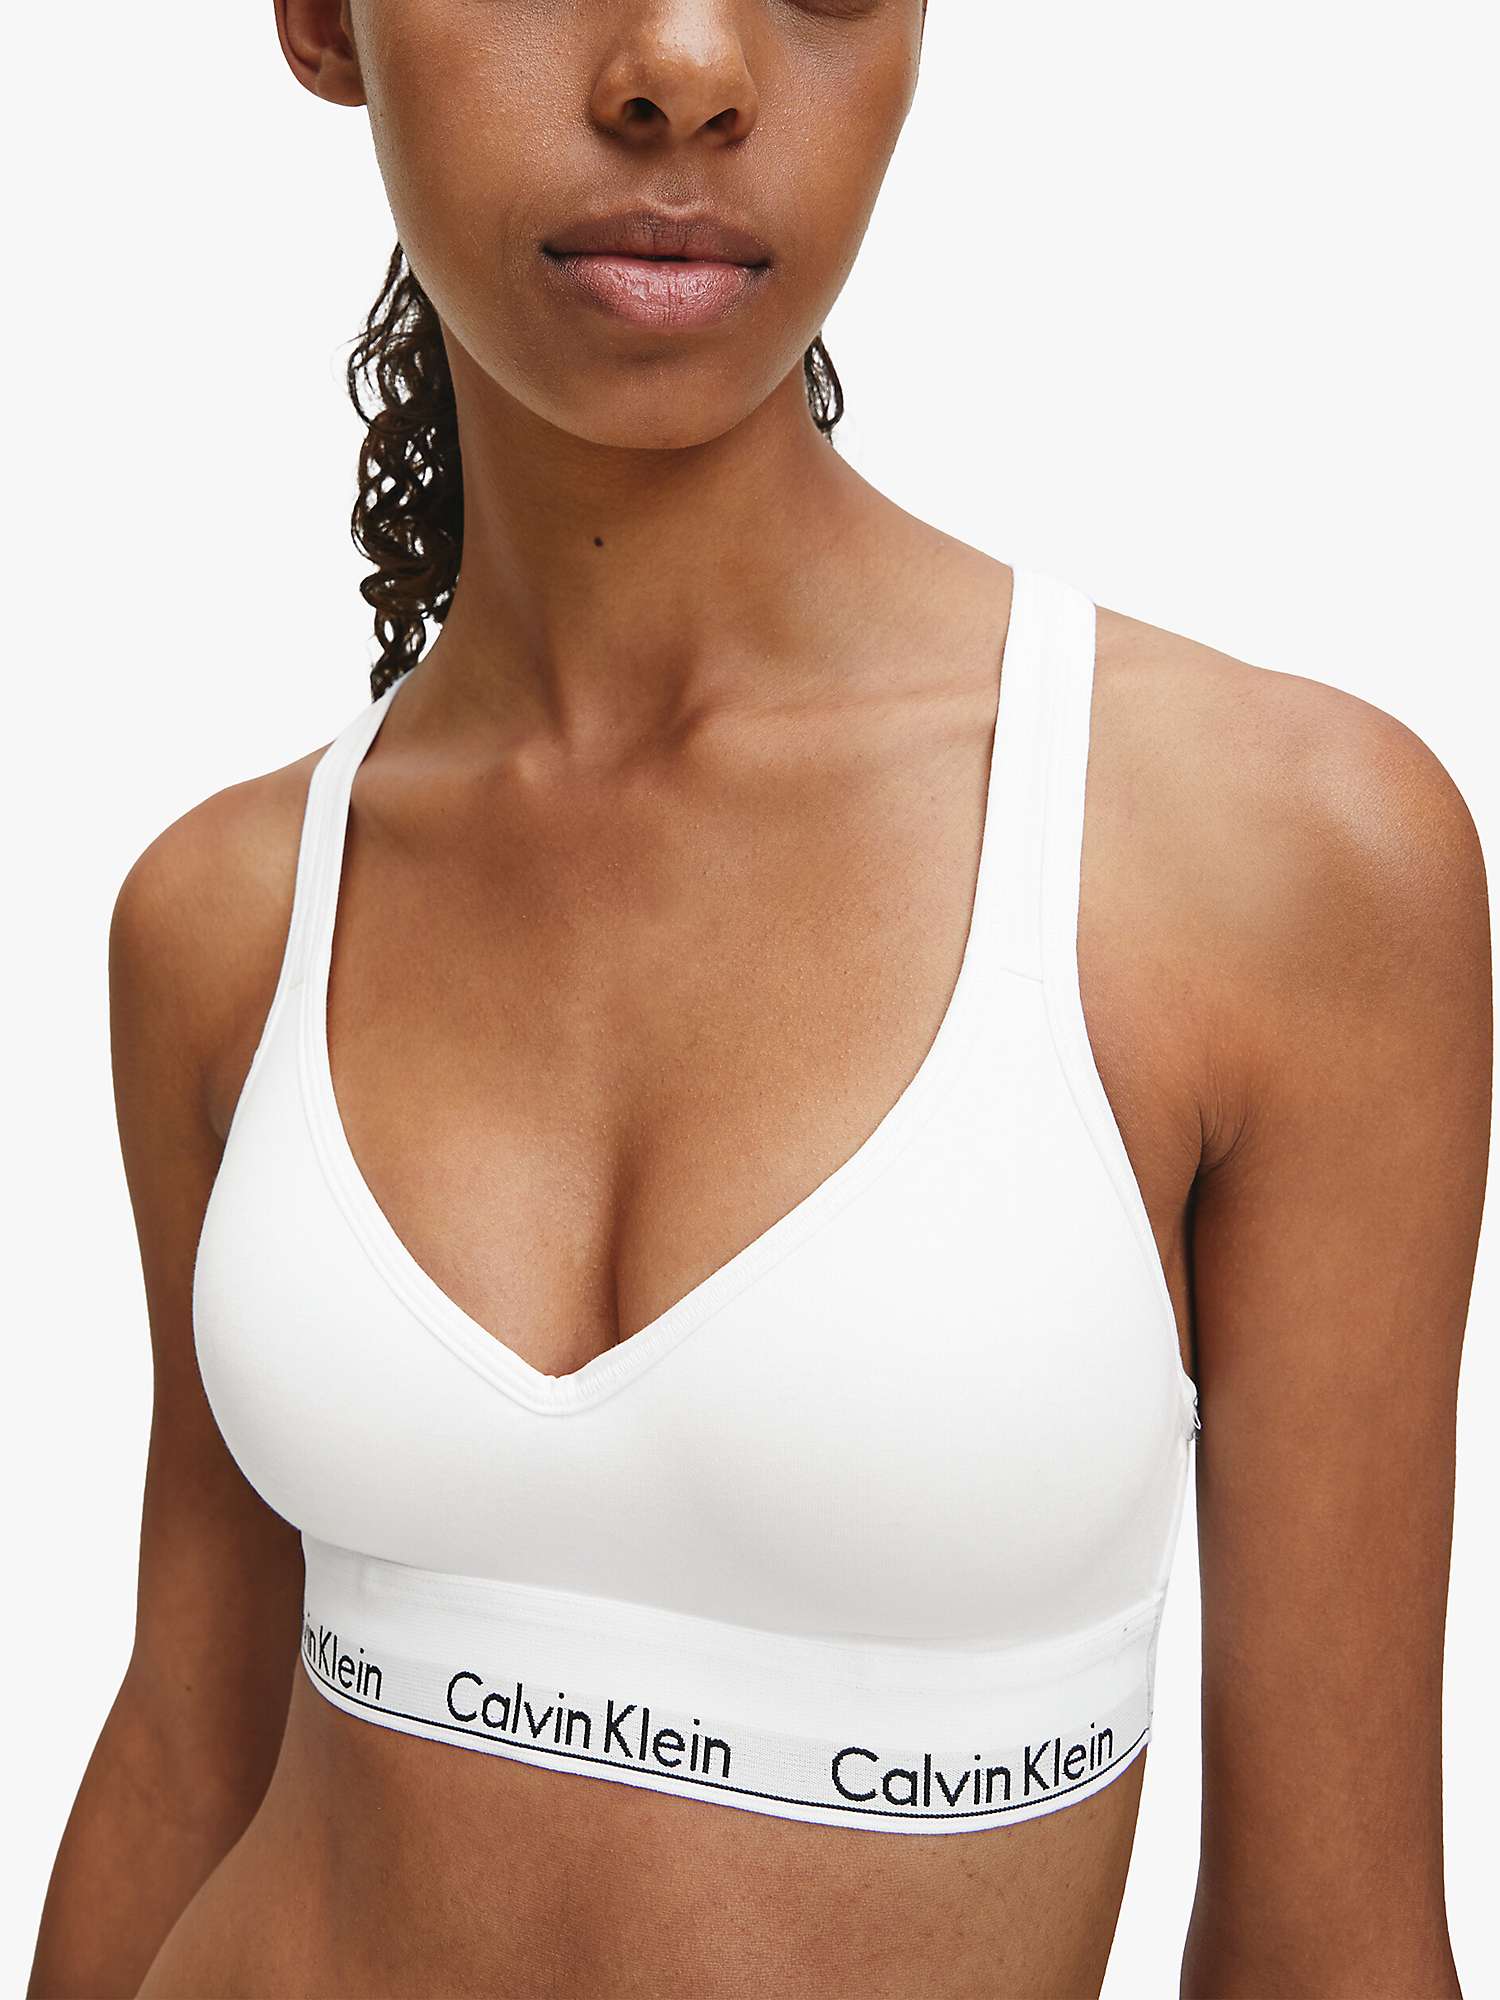 White Calvin Klein Bra - Shop on Pinterest